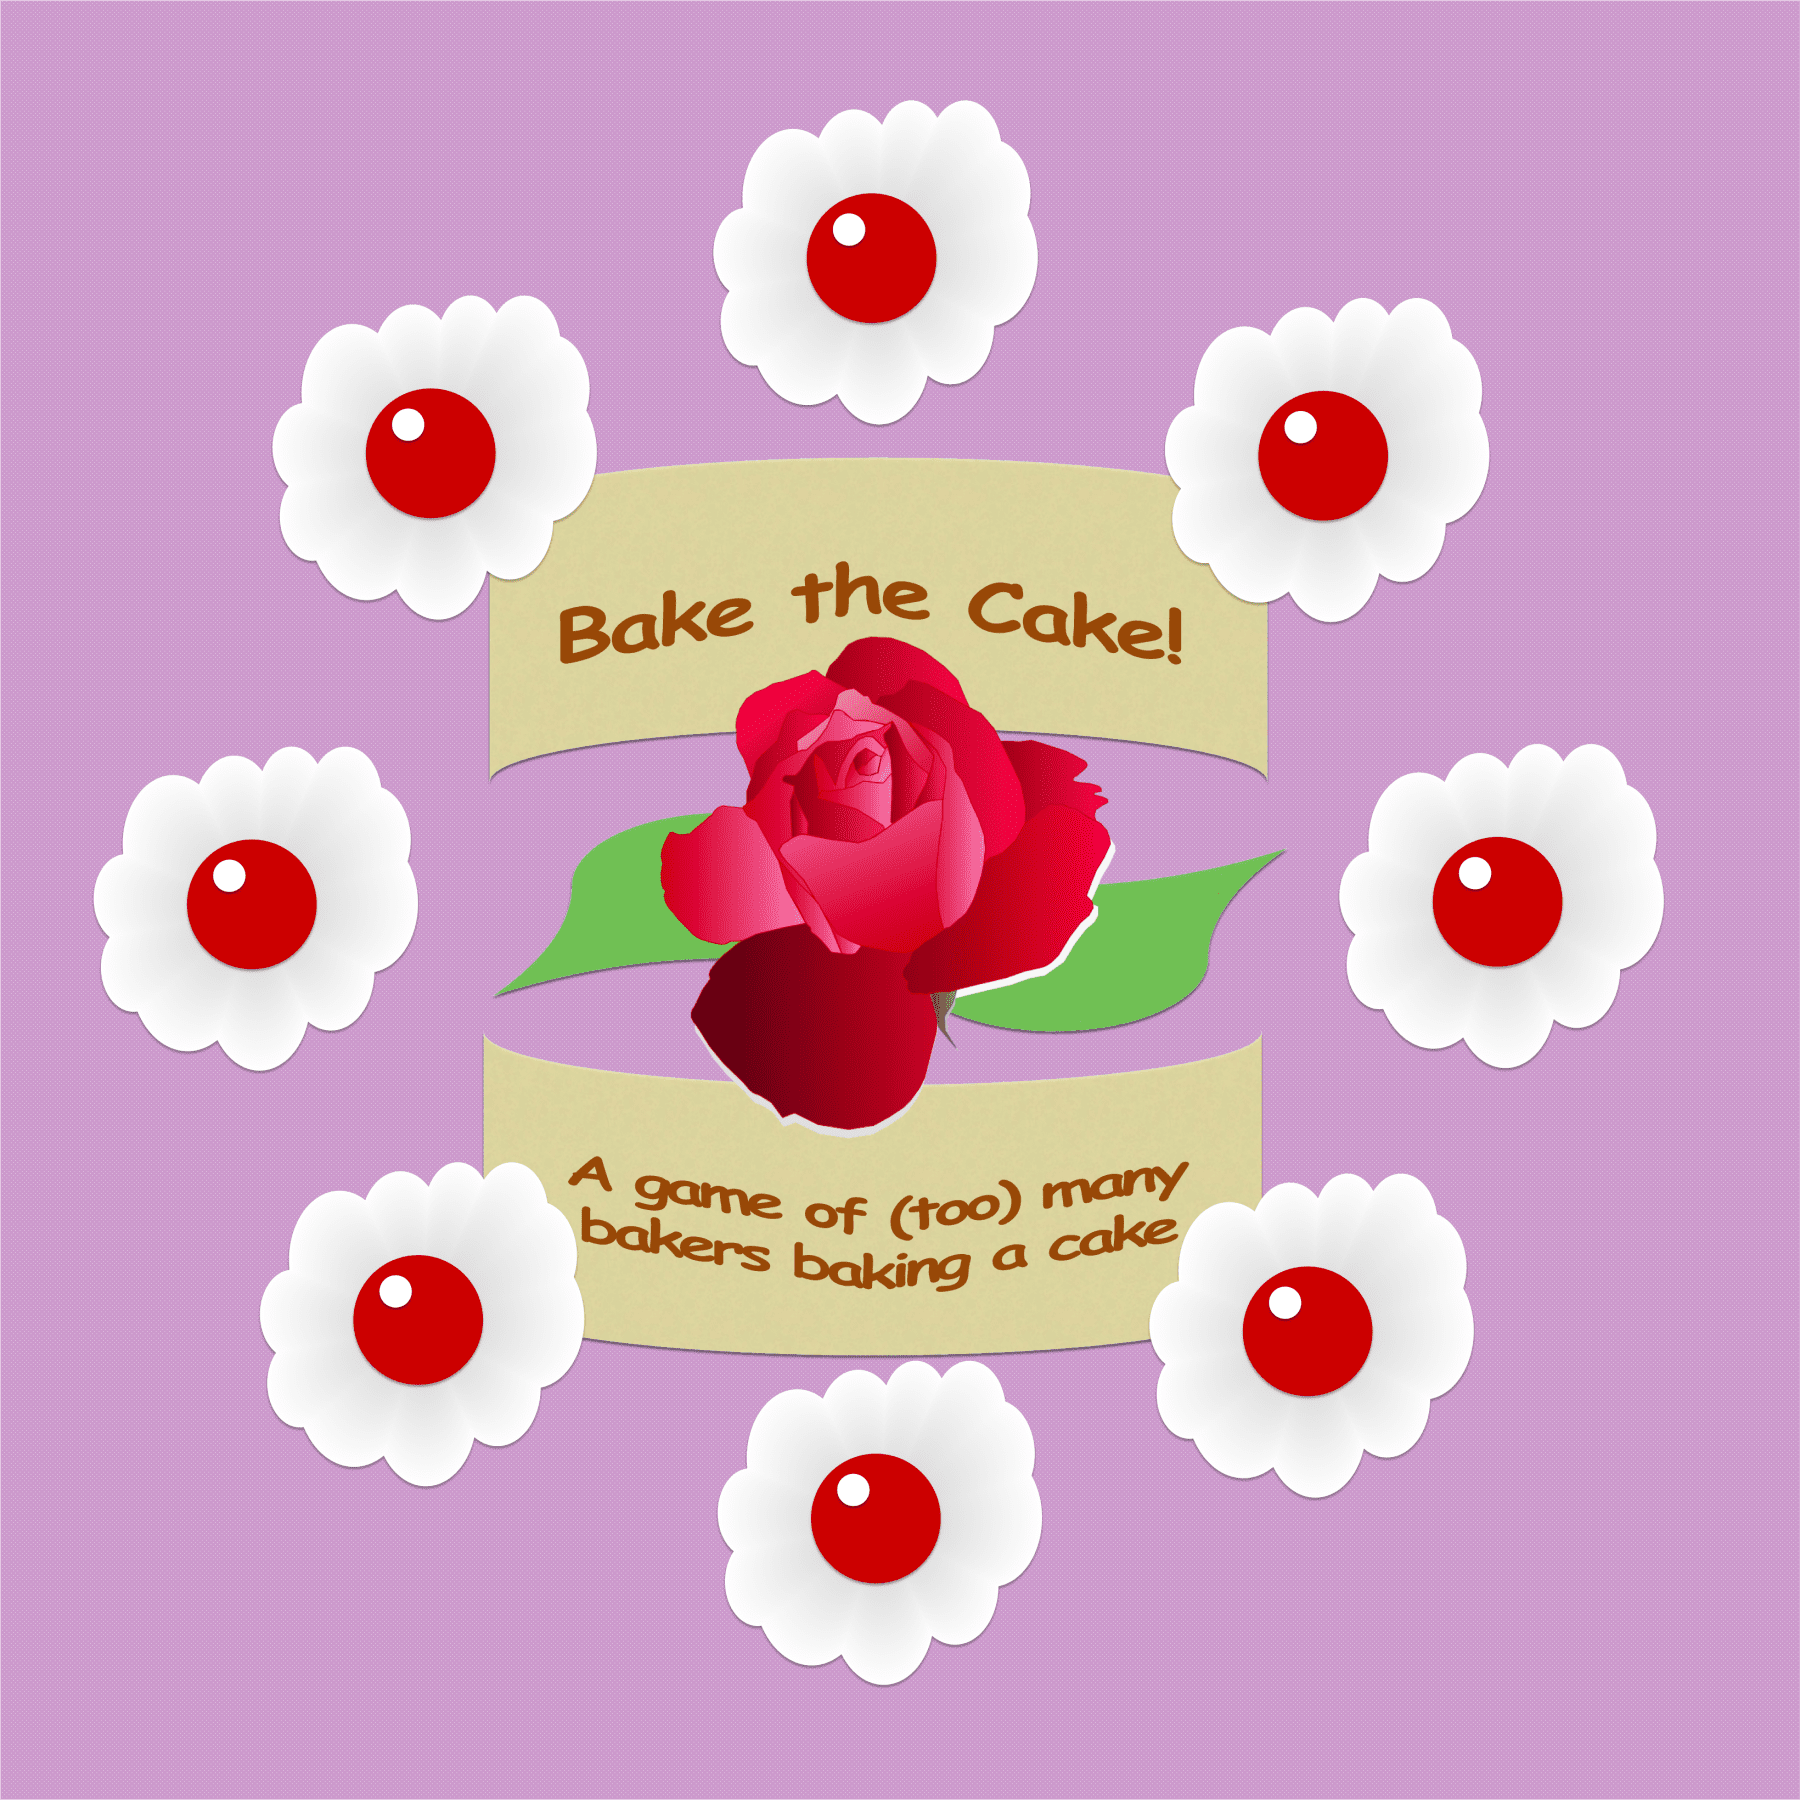 Bake the Cake!